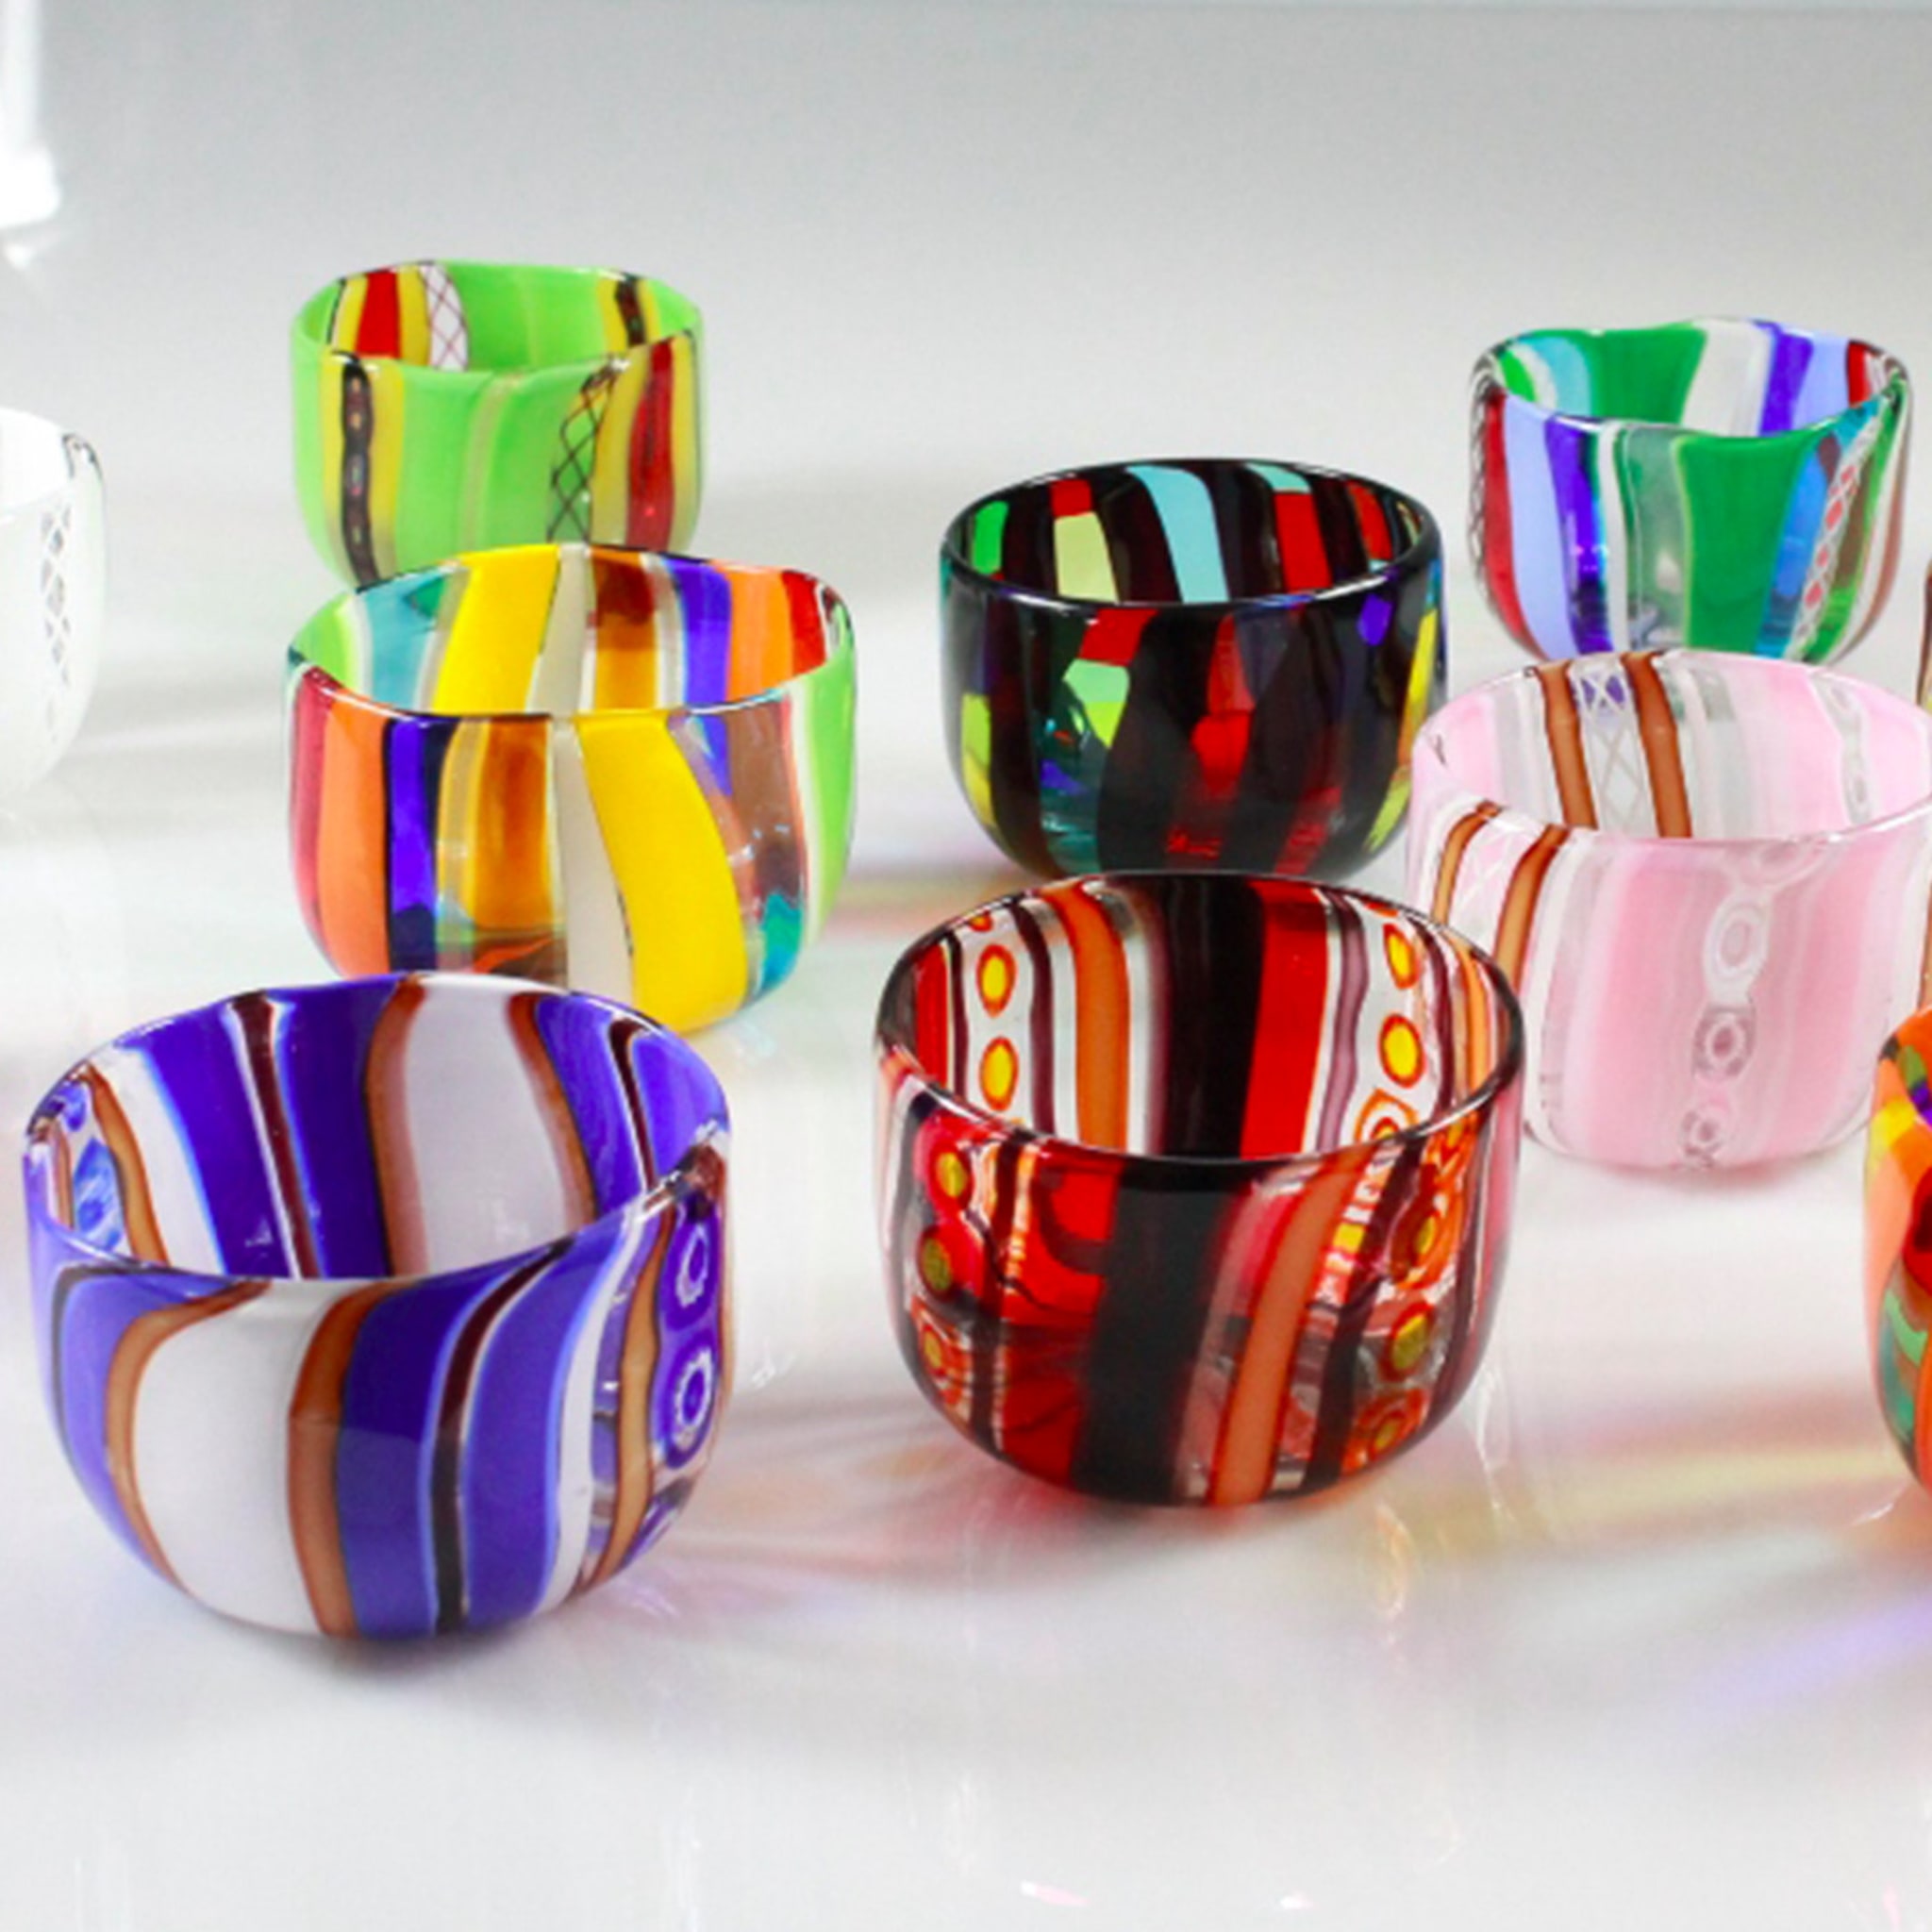 Fantasy Set of 6 Bowls #2 in Murano Glass - Alternative view 1